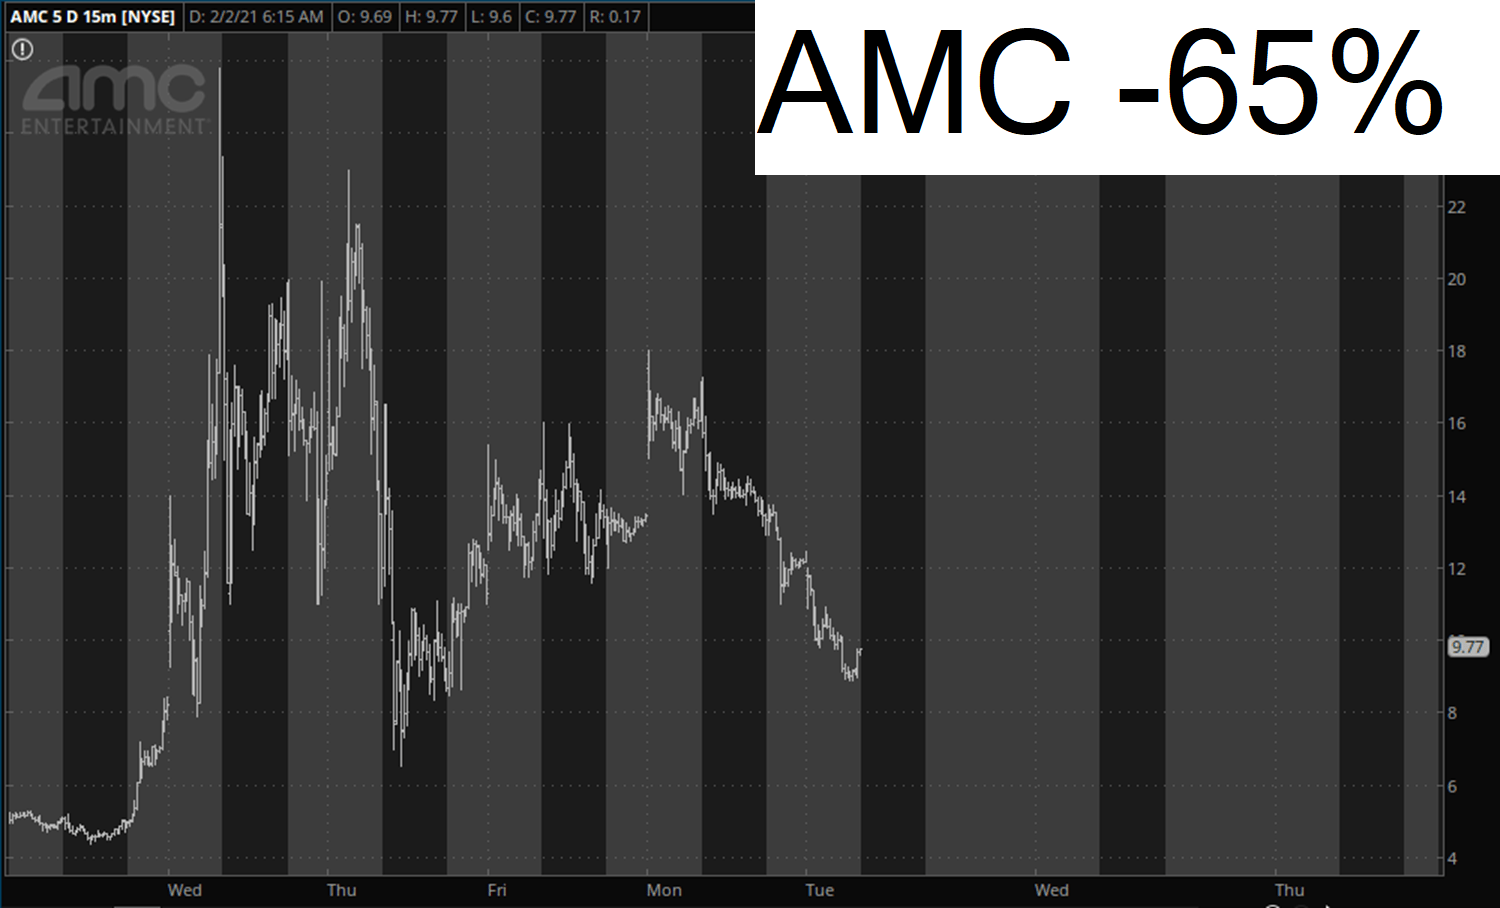 AMC Entertainment.